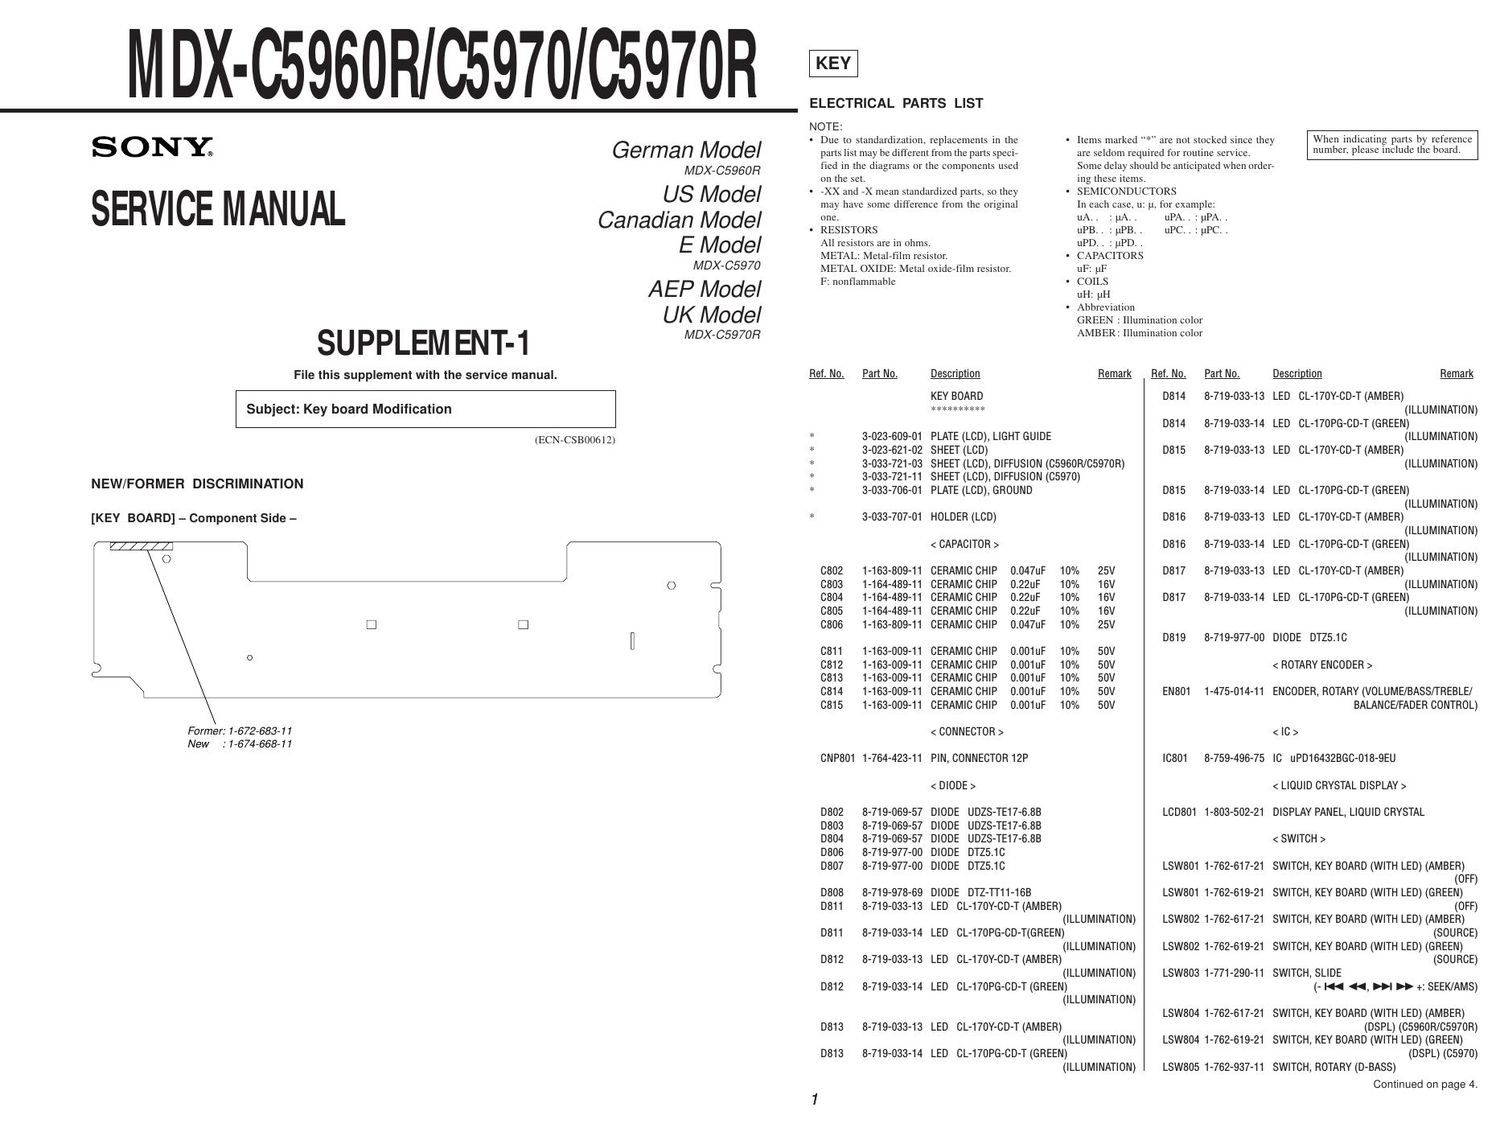 sony mdx c 5960 r service manual